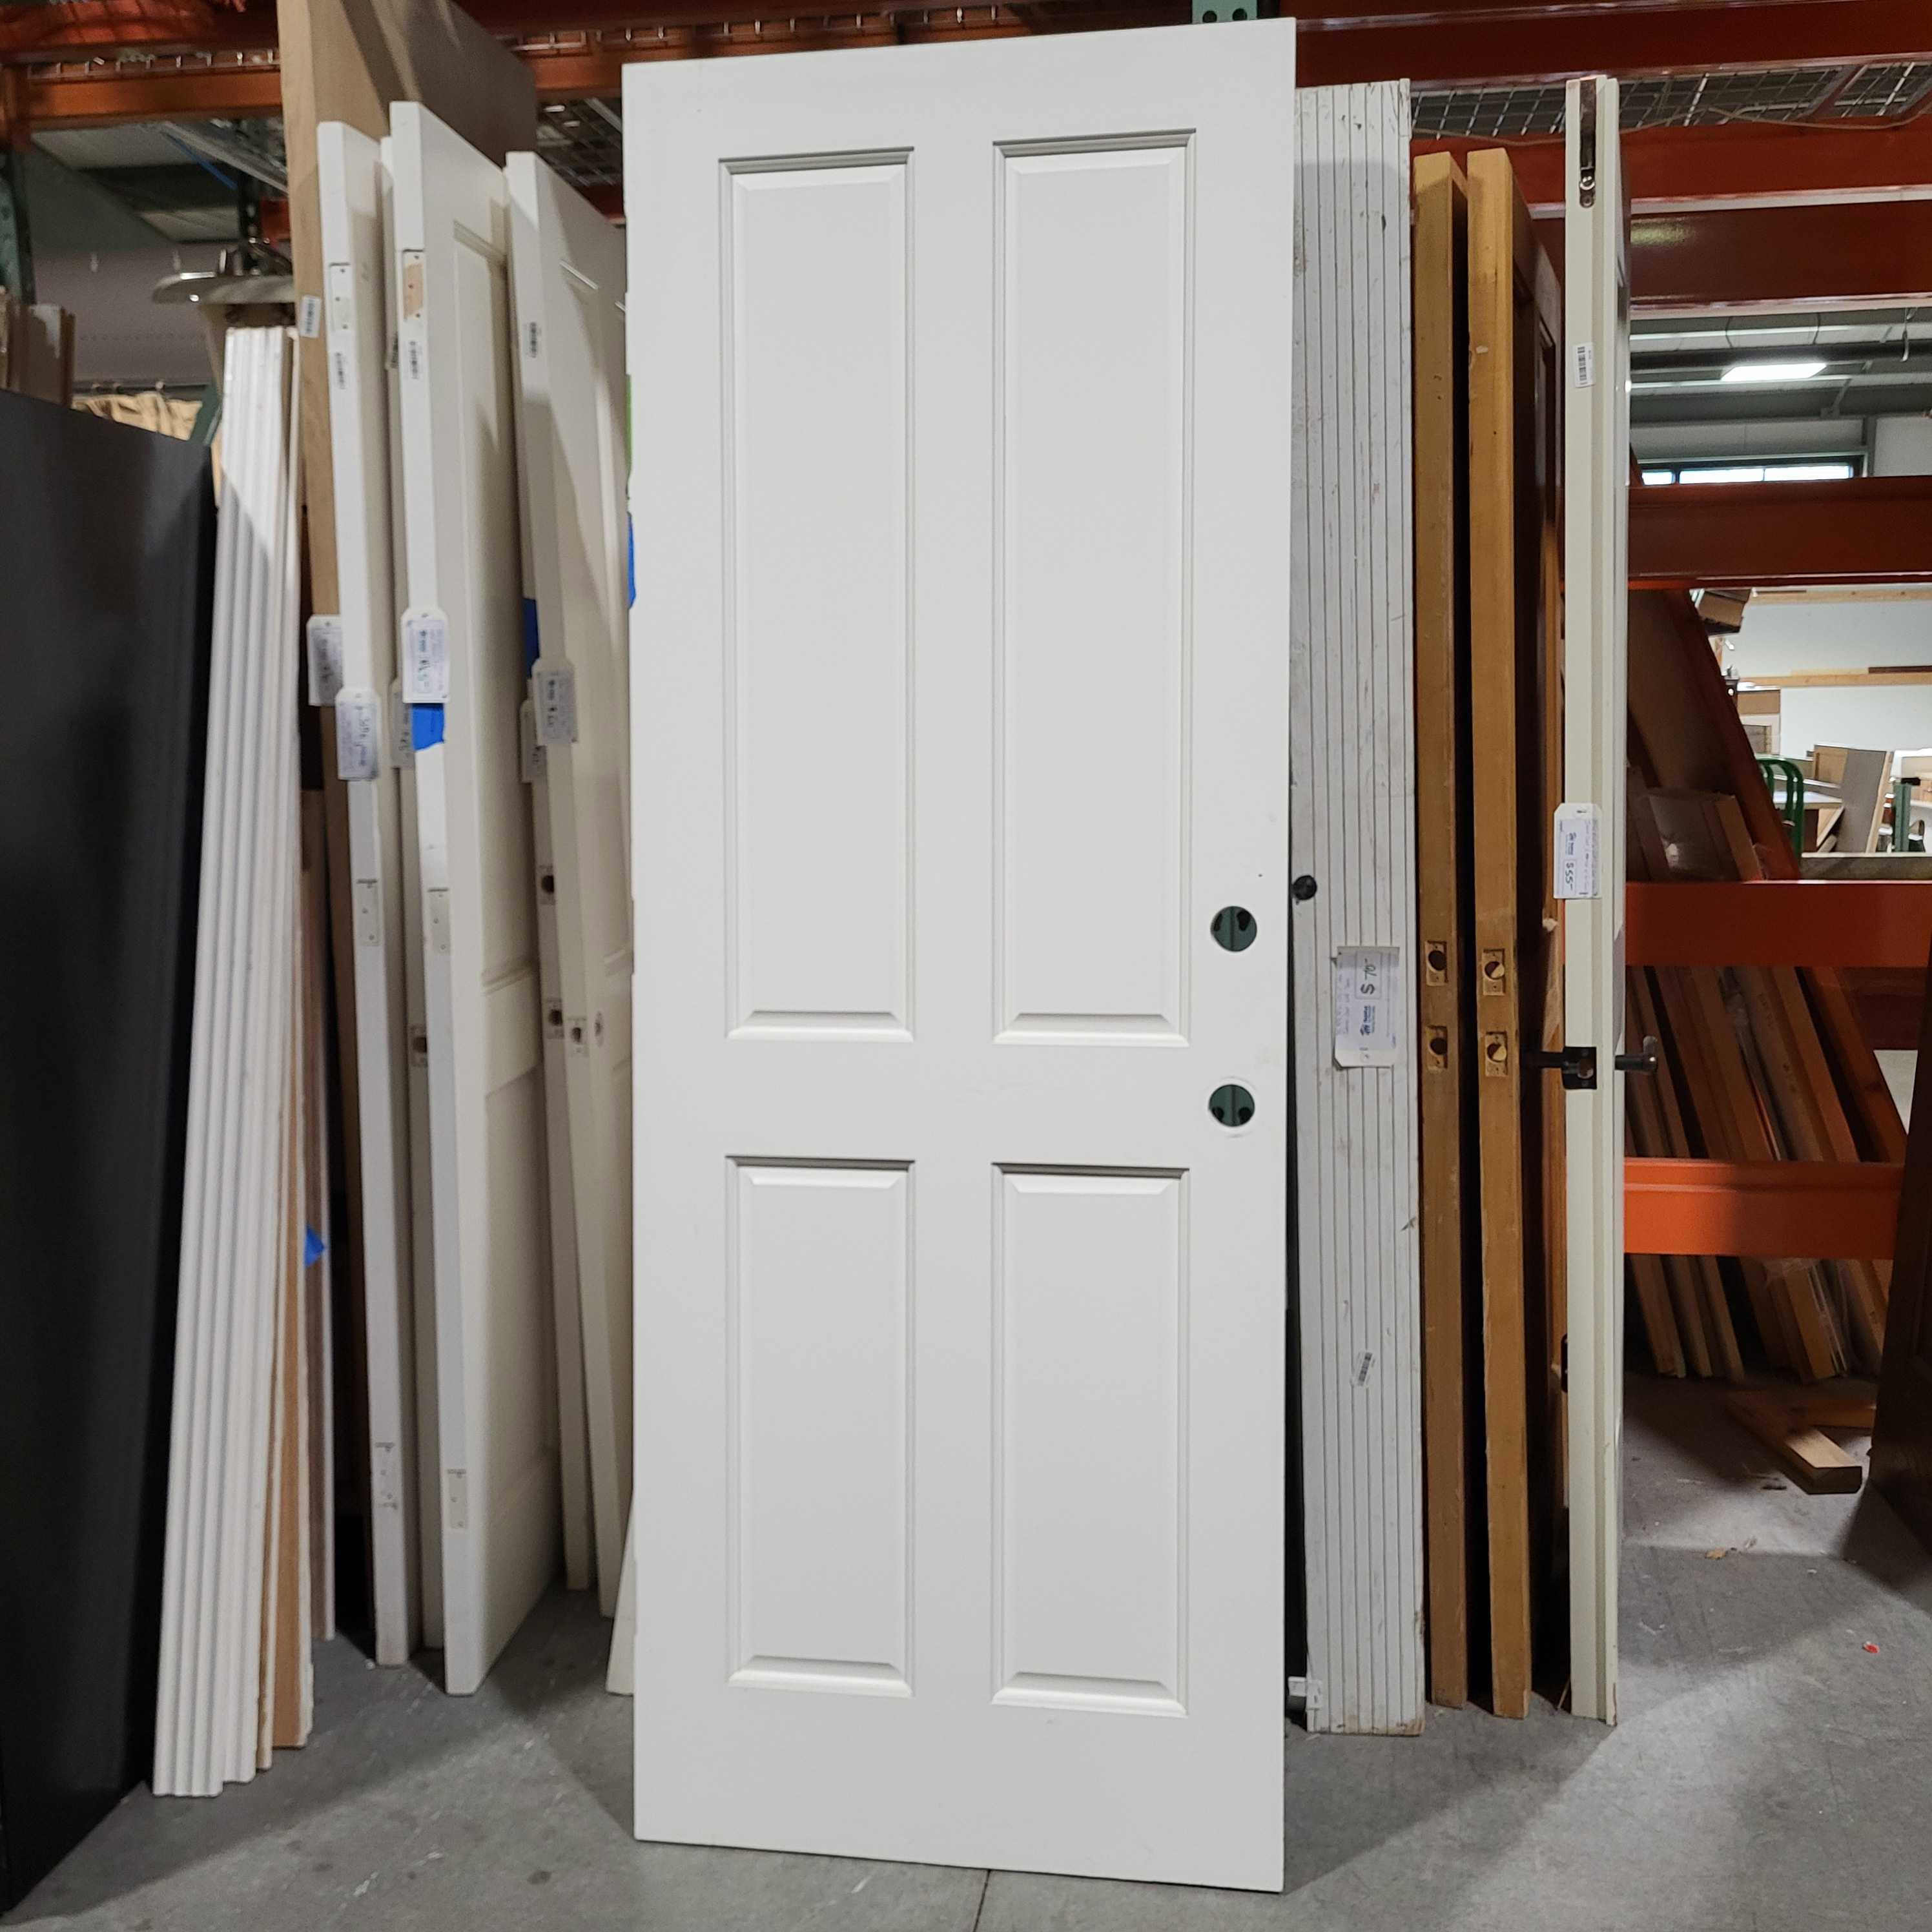 30.75"x 83.75"x 1.5" 4 Panel White Wood Interior Door